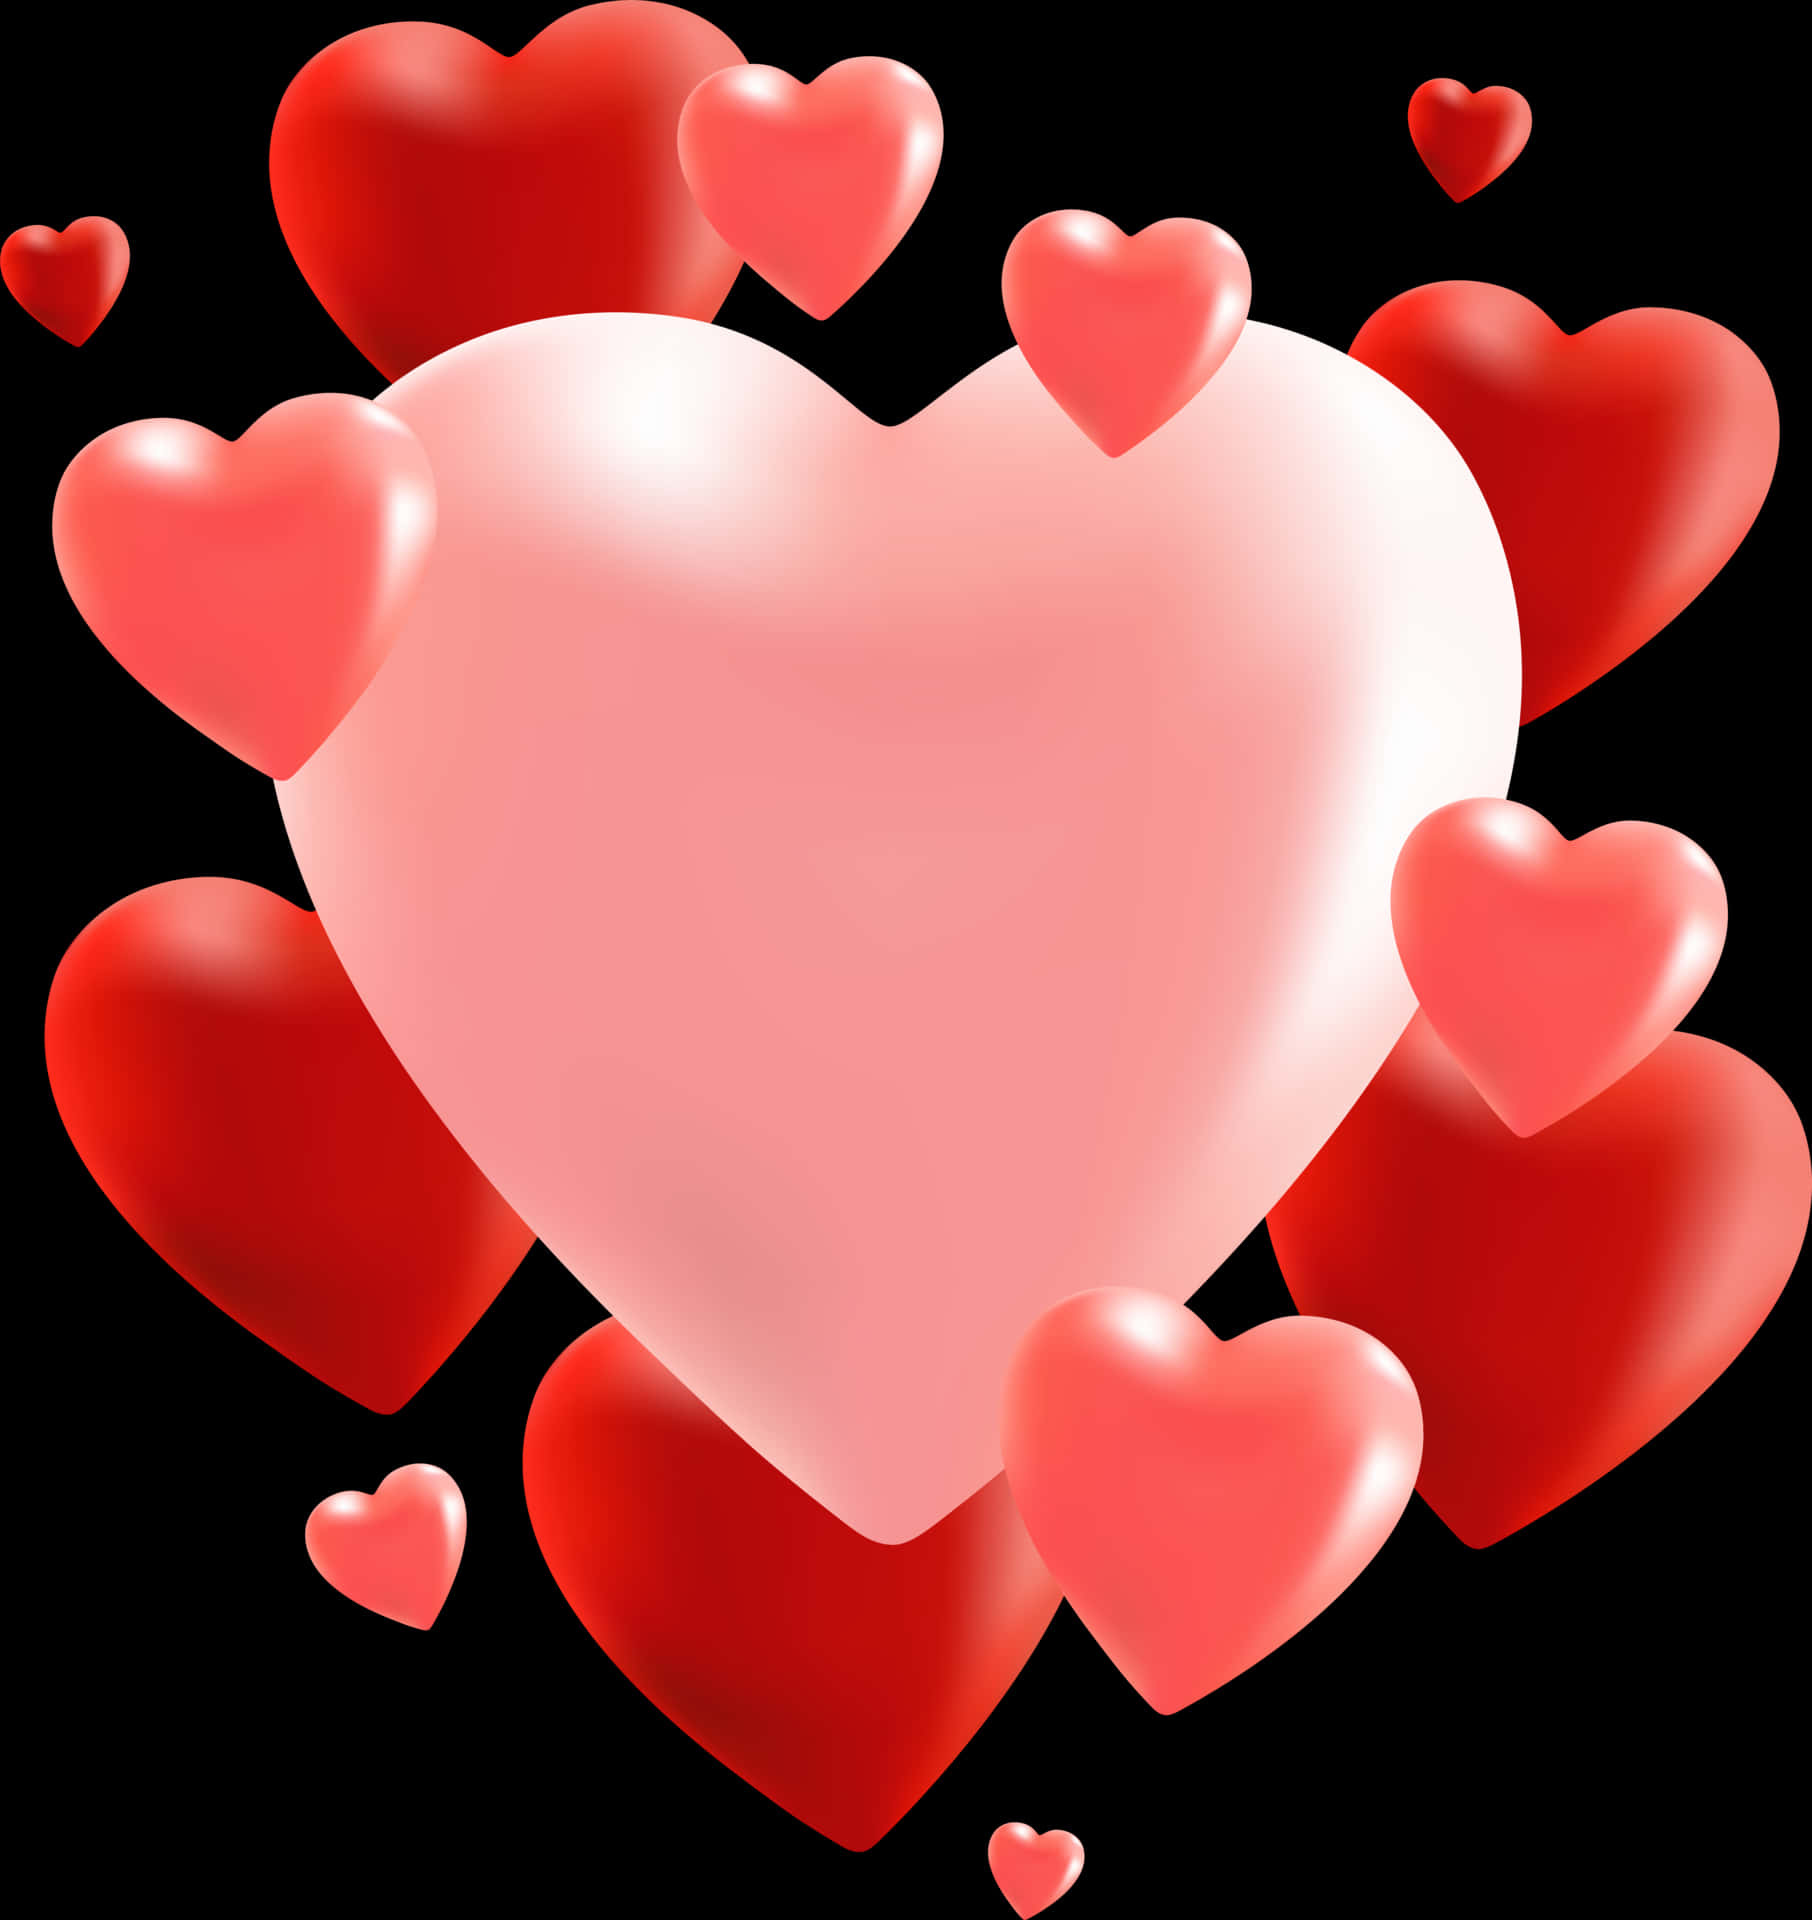 Love Hearts Romantic Background Vector Art Background